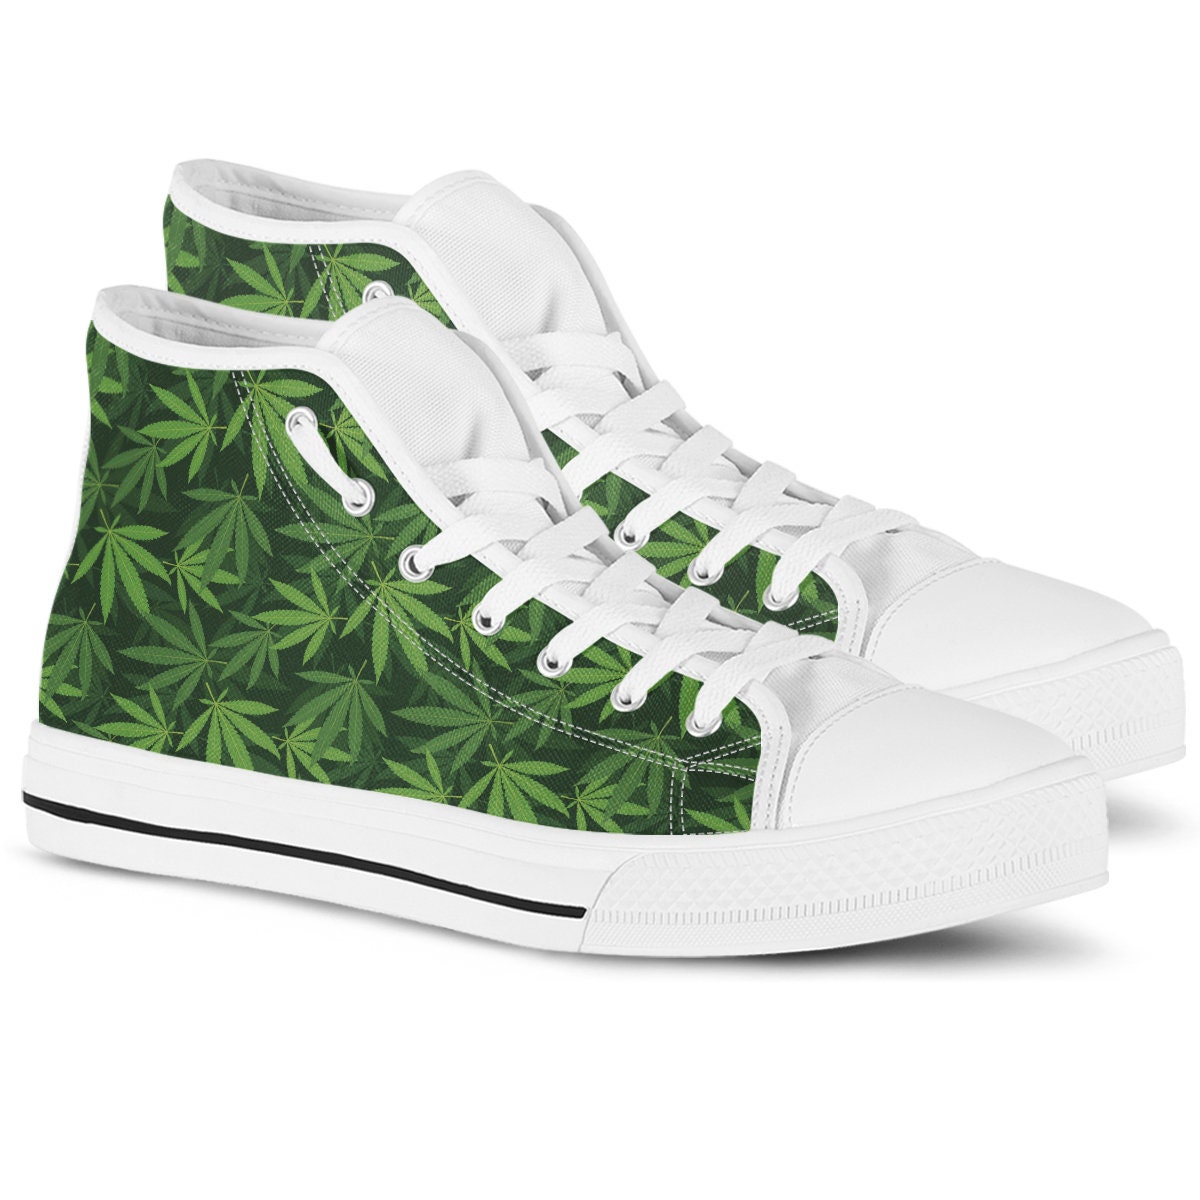 Weed sneakers marijuana shoes cannabis leaf high tops | Etsy